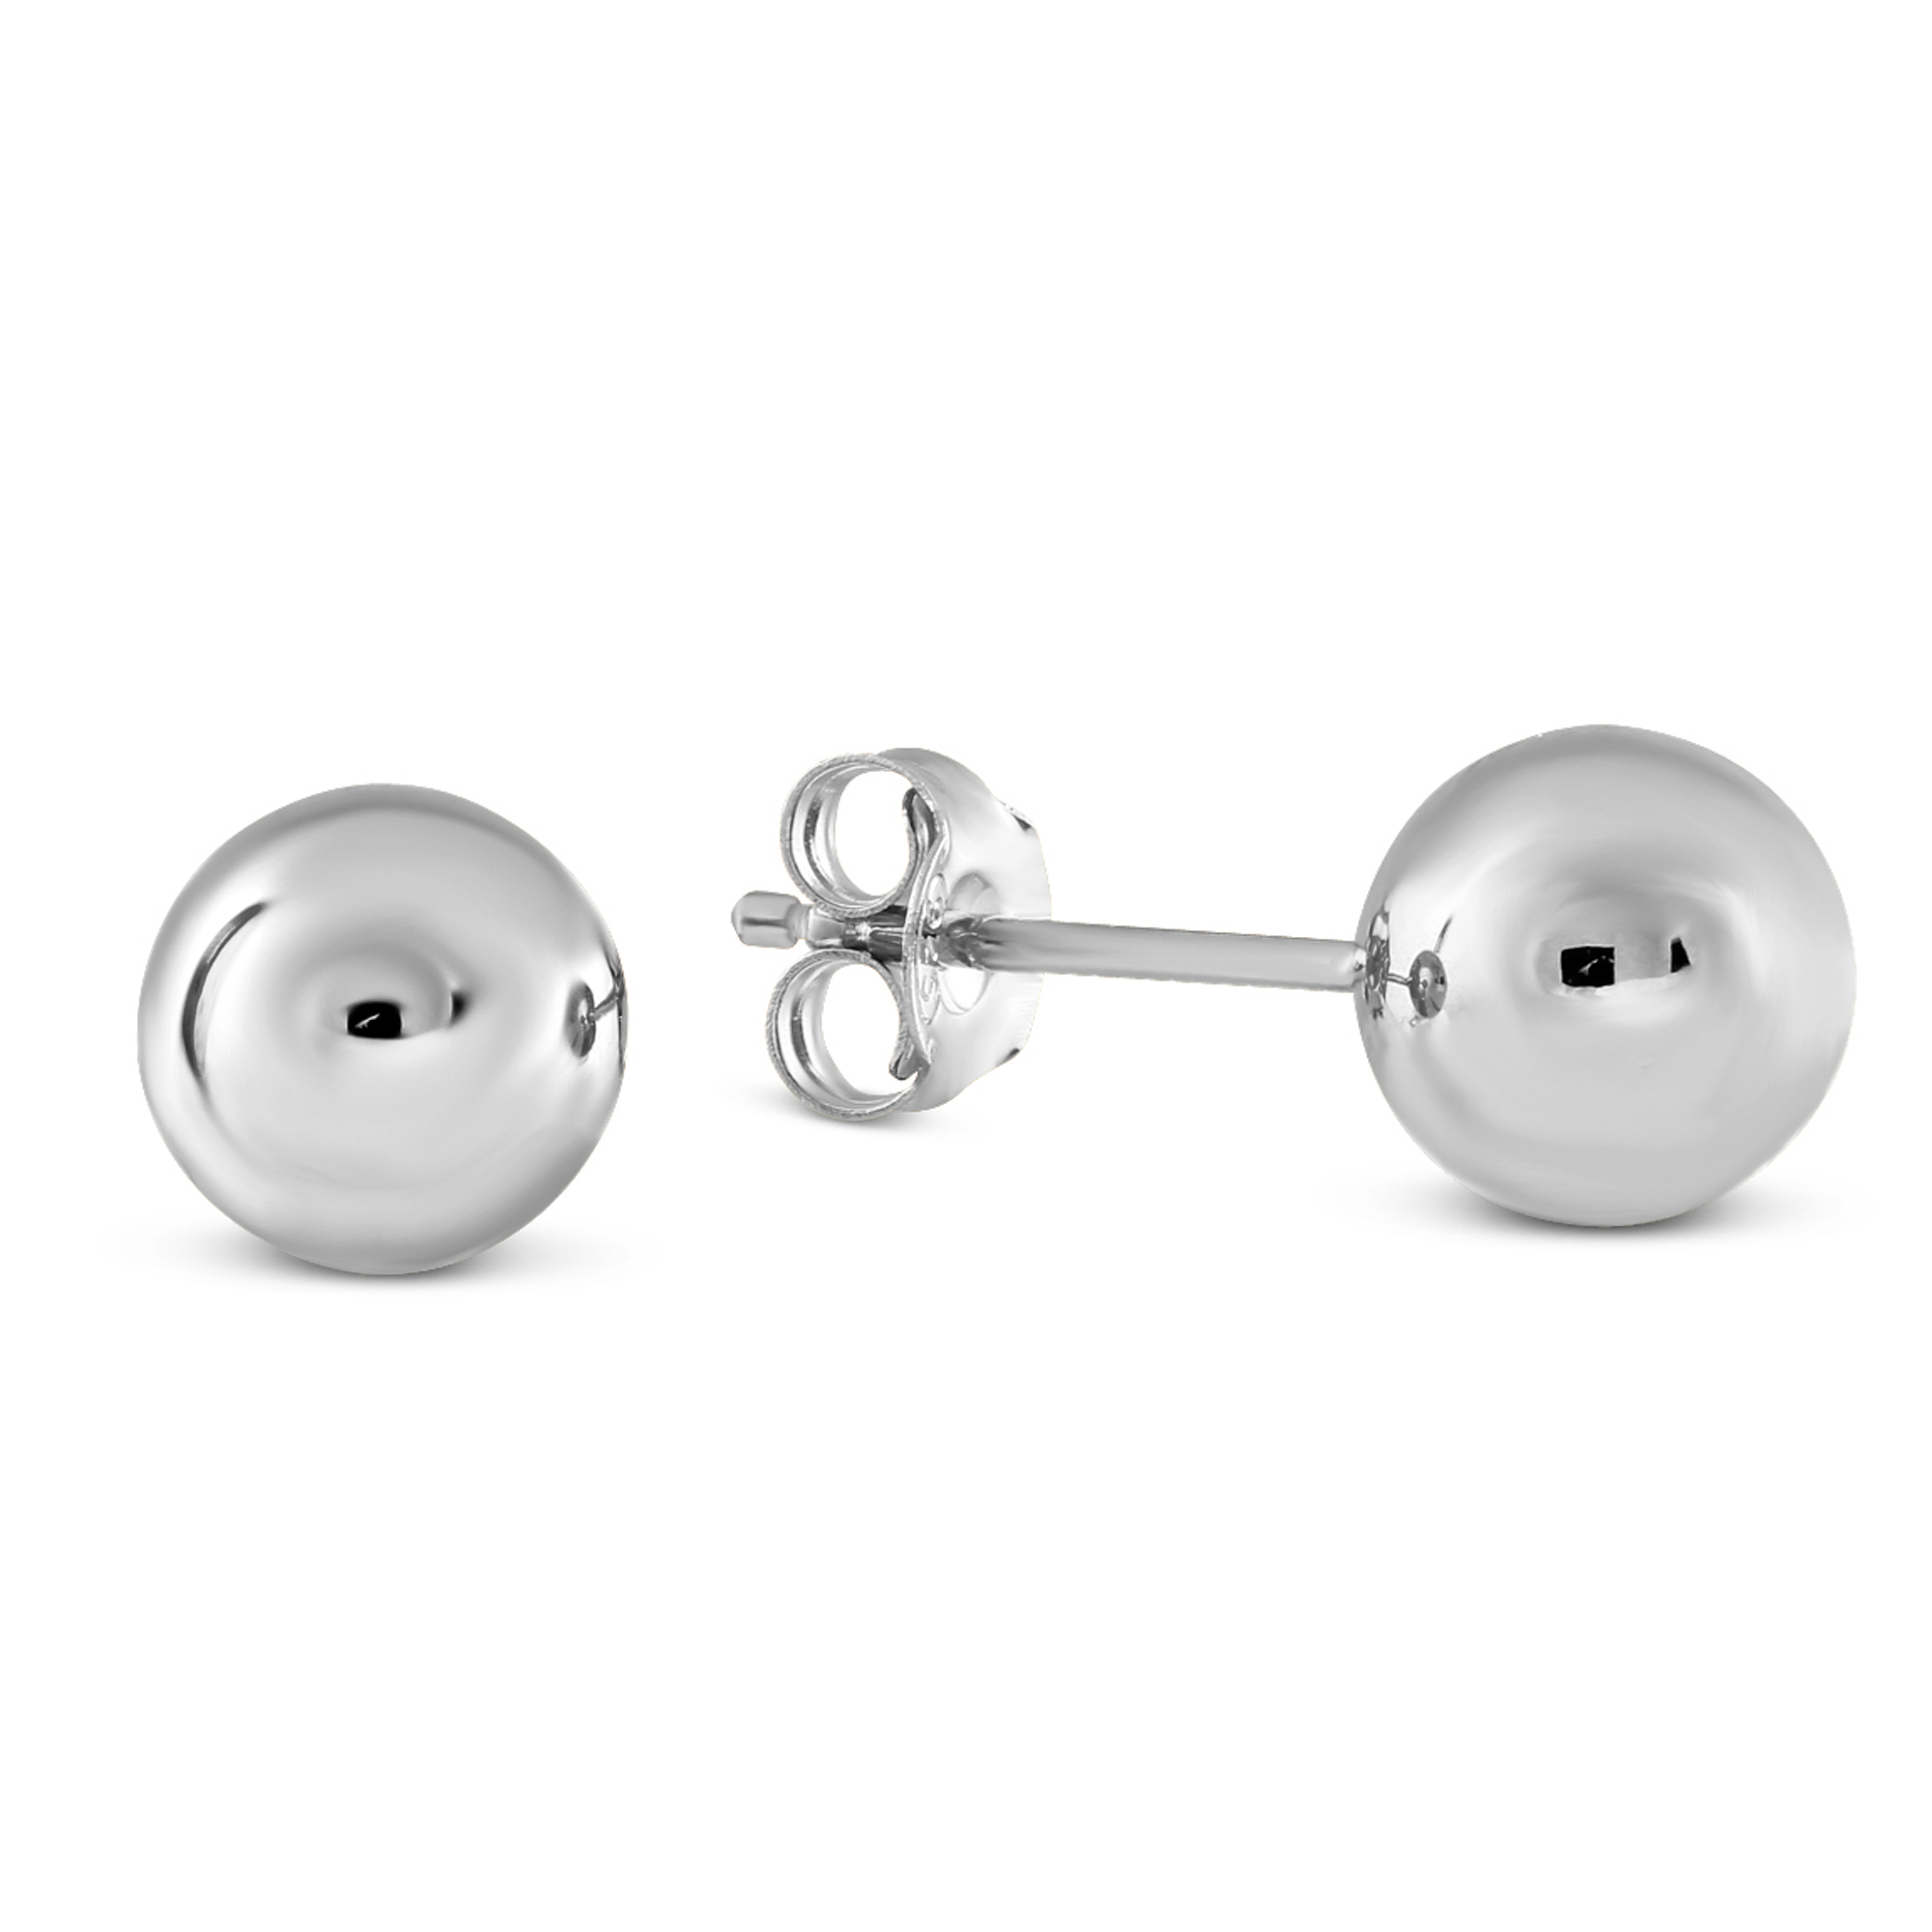 Sterling Silver Ball Earrings, 8mm | Borsheims